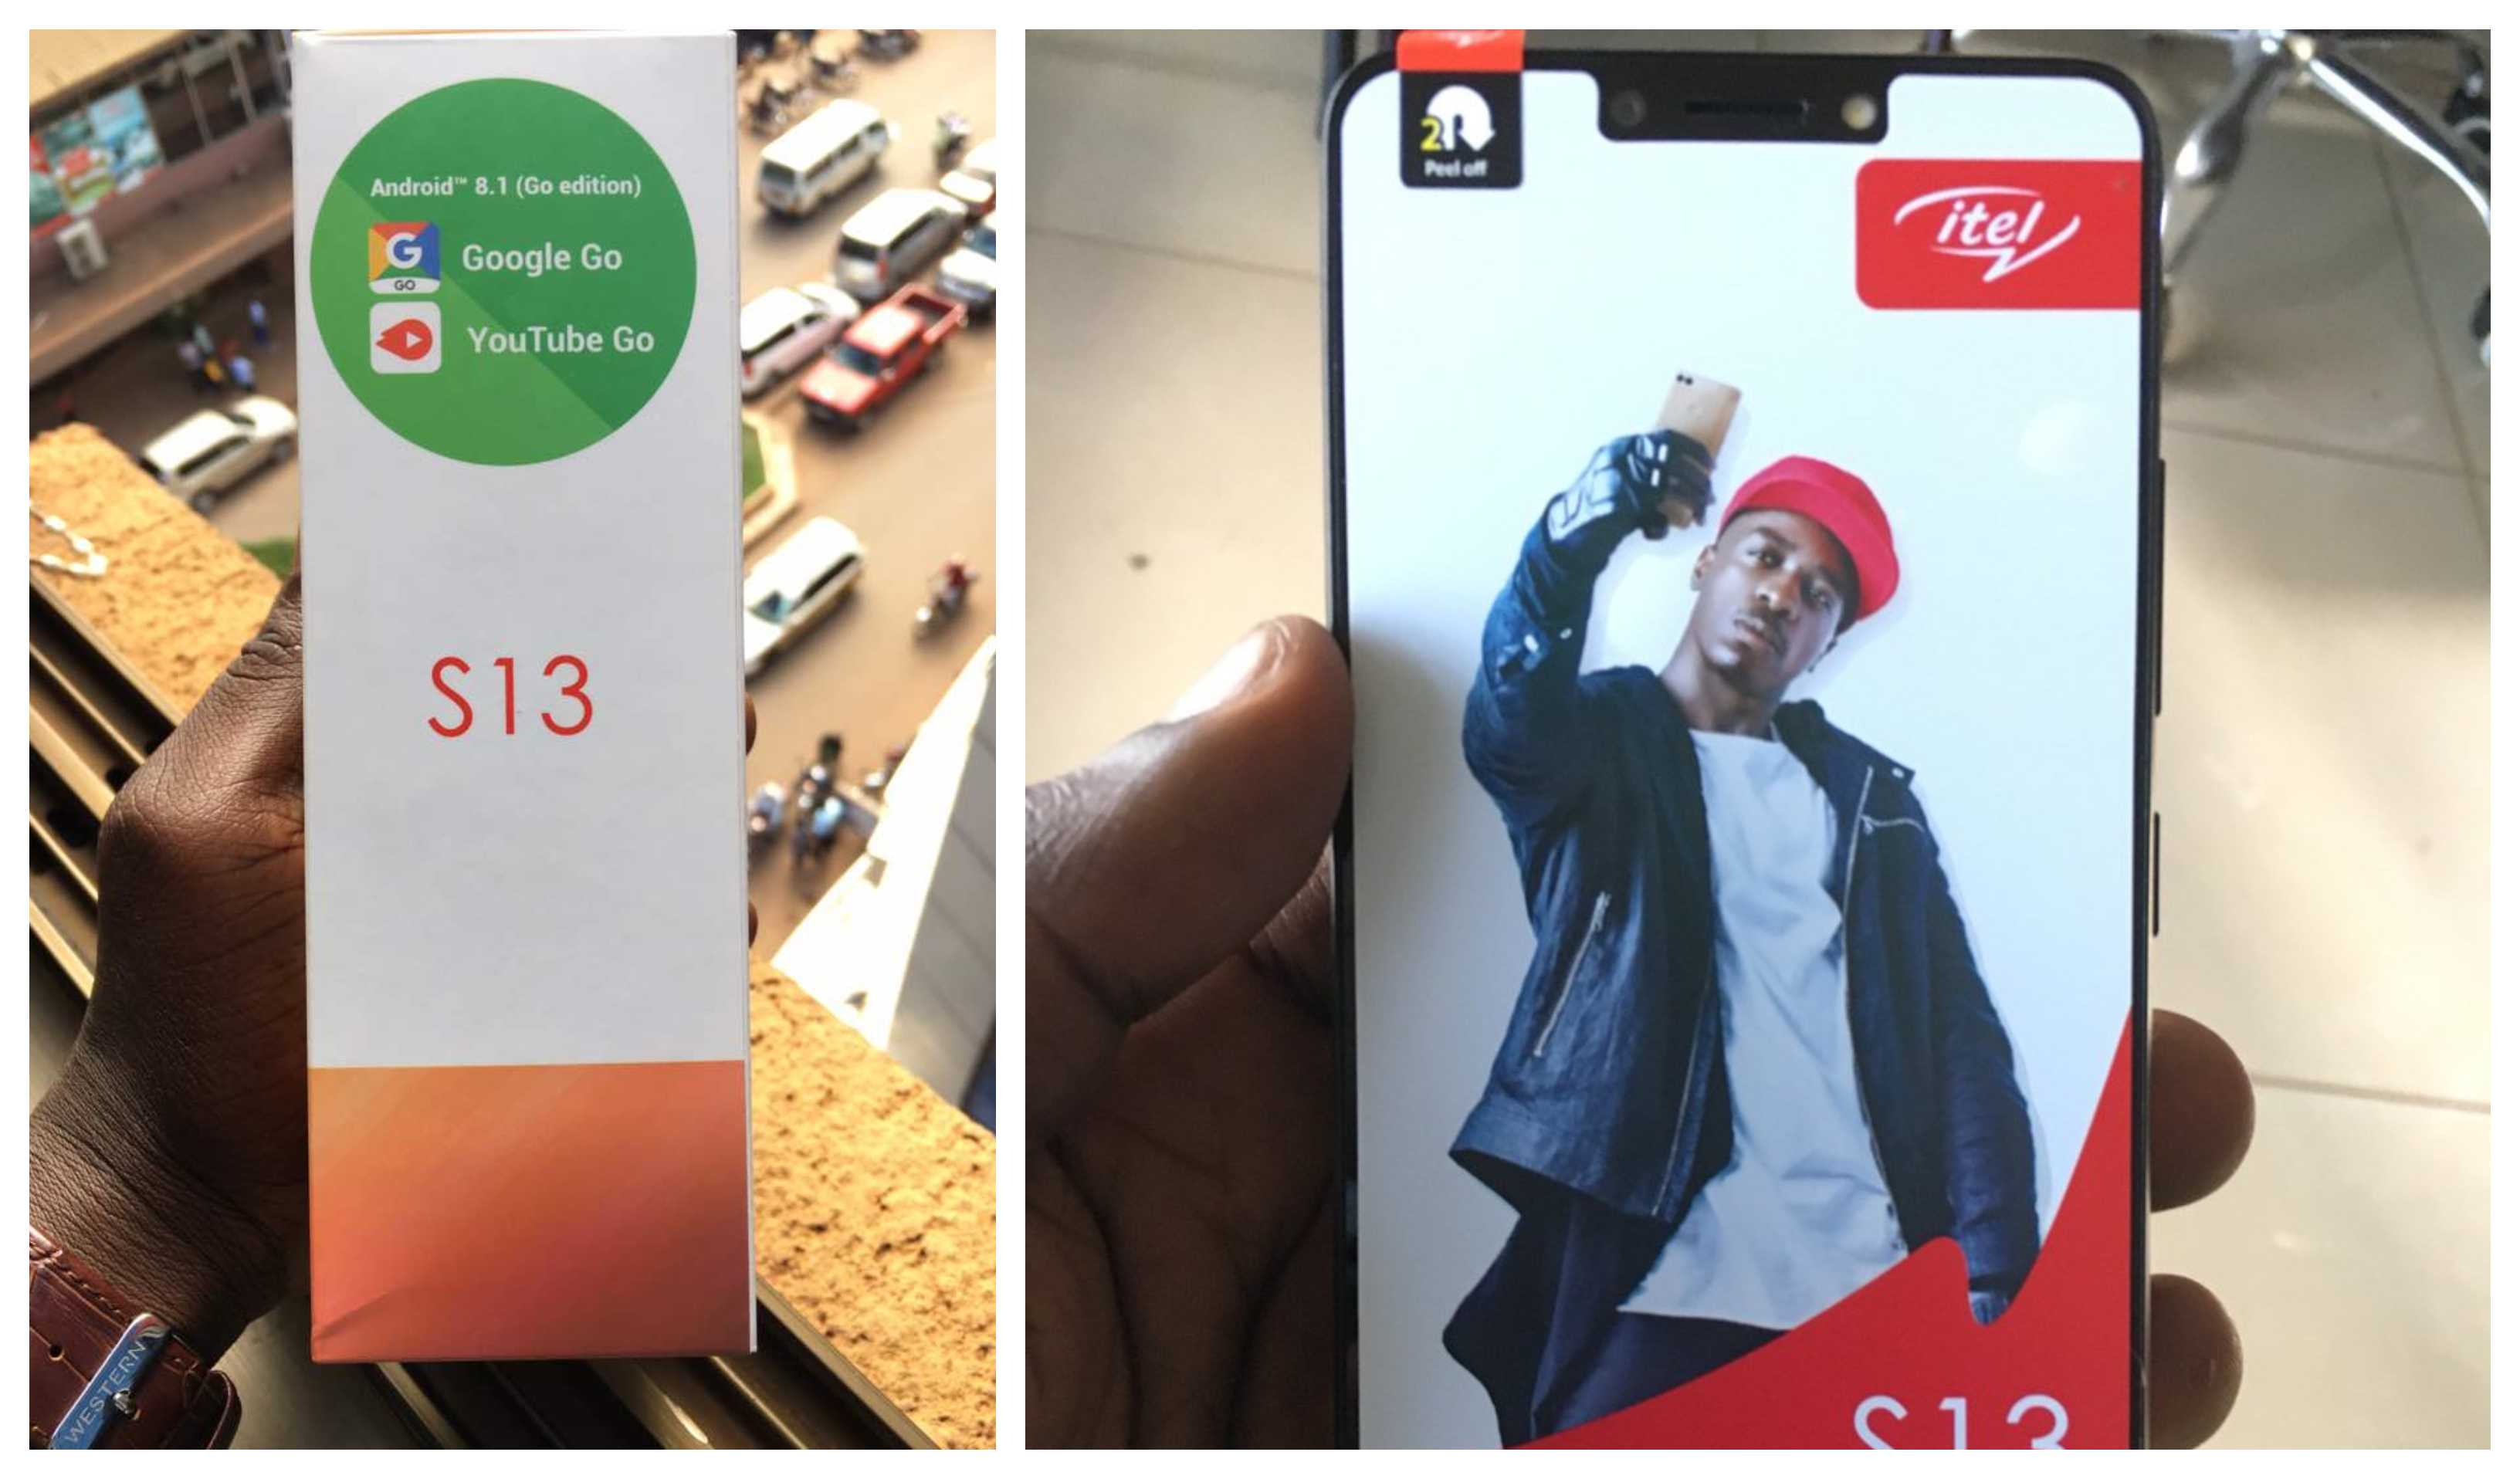 Itel’s Latest Selfie Series Smartphone, S13 Launched in Uganda